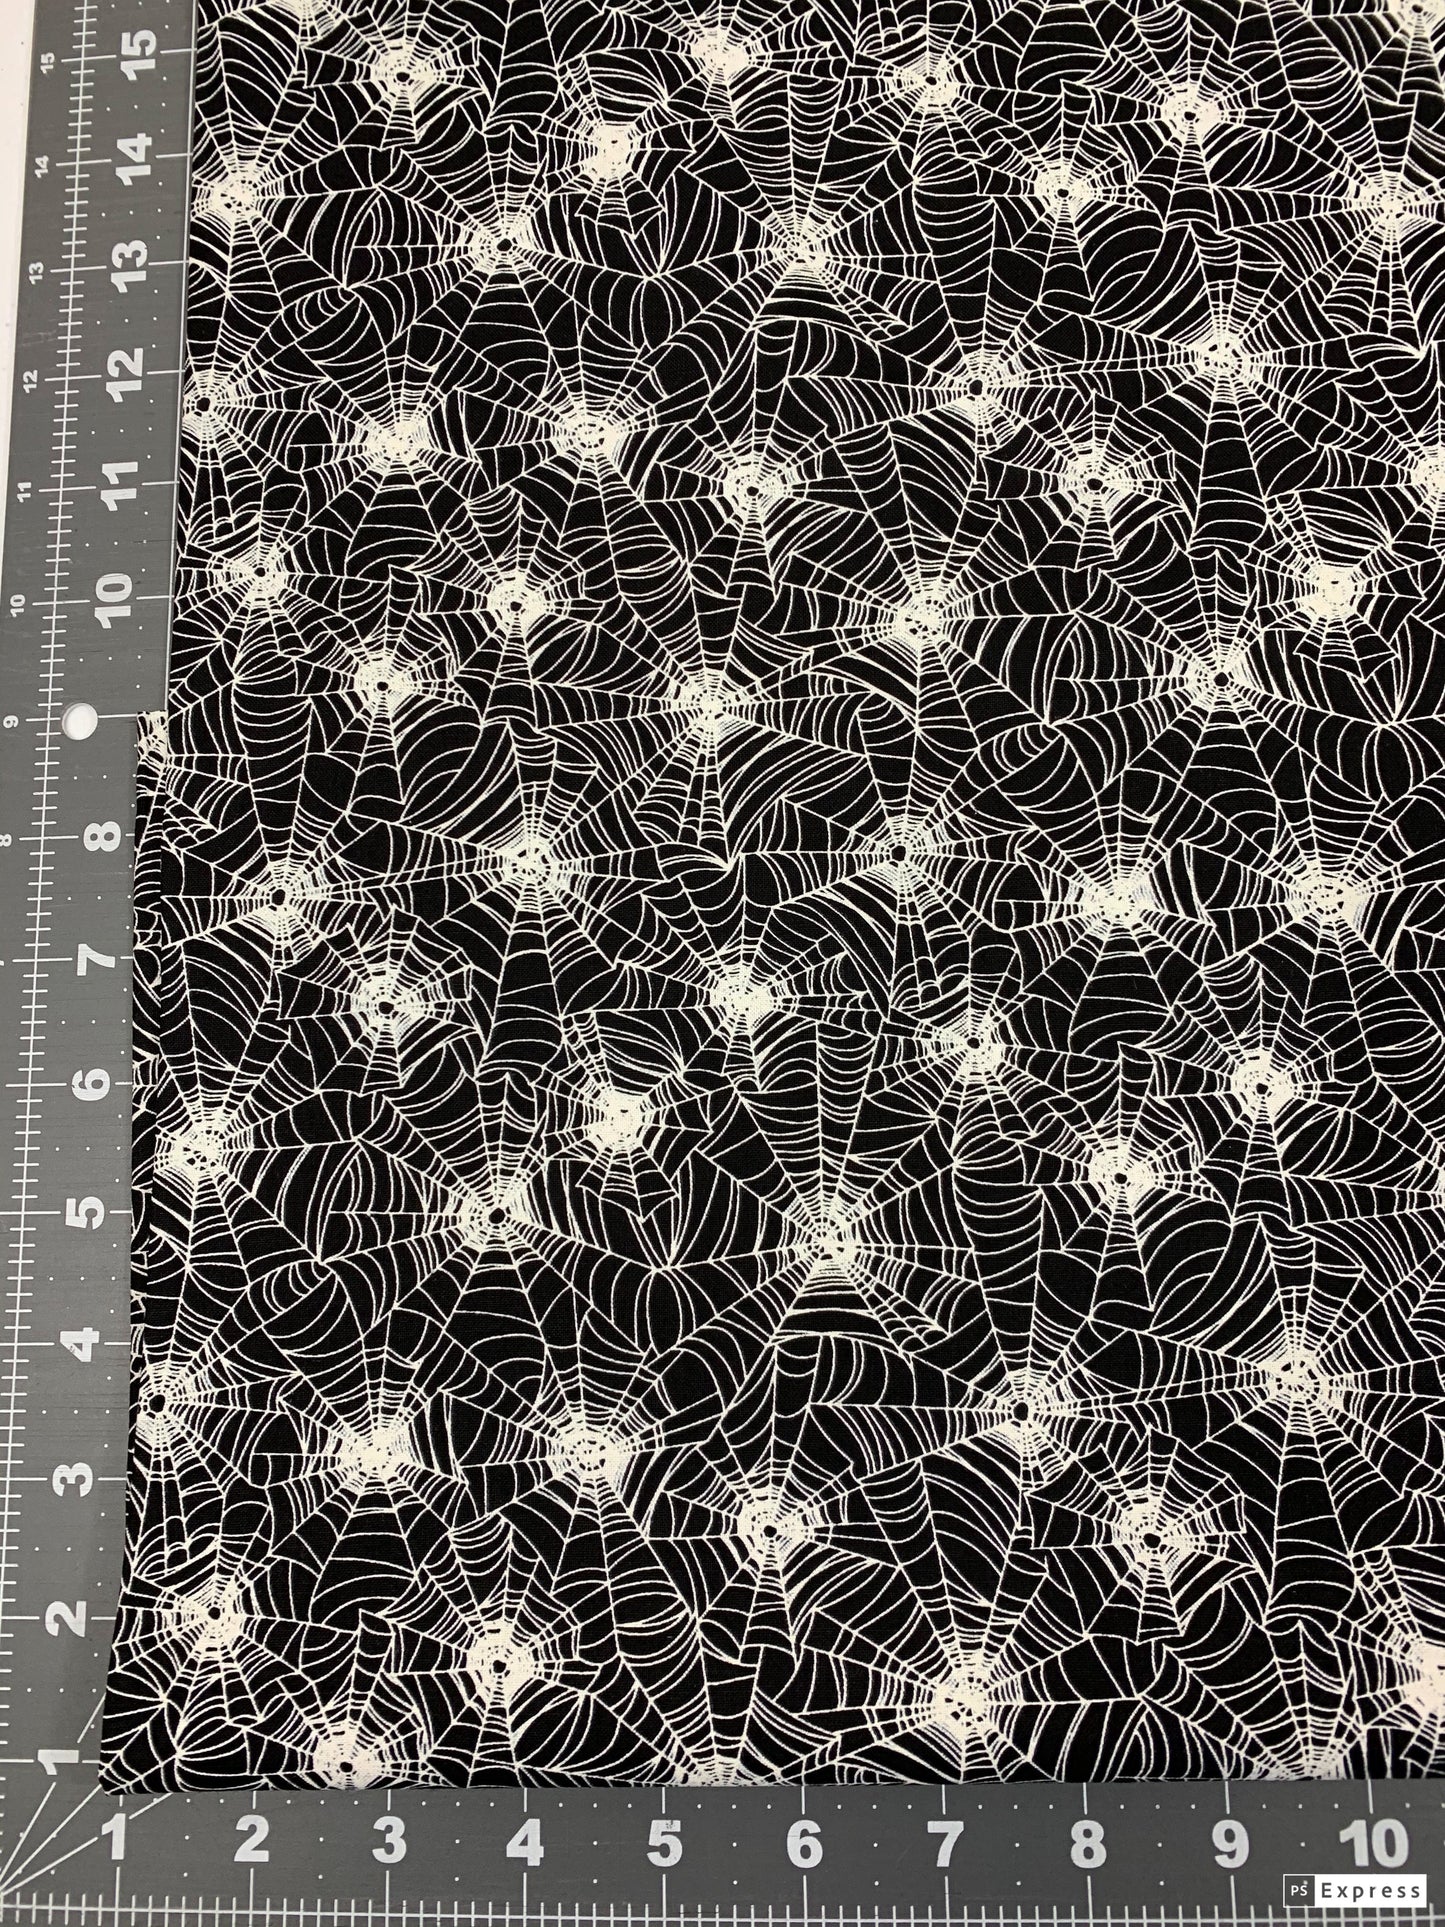 Glow in the Dark Spiderweb fabric CG7786 Halloween fabric